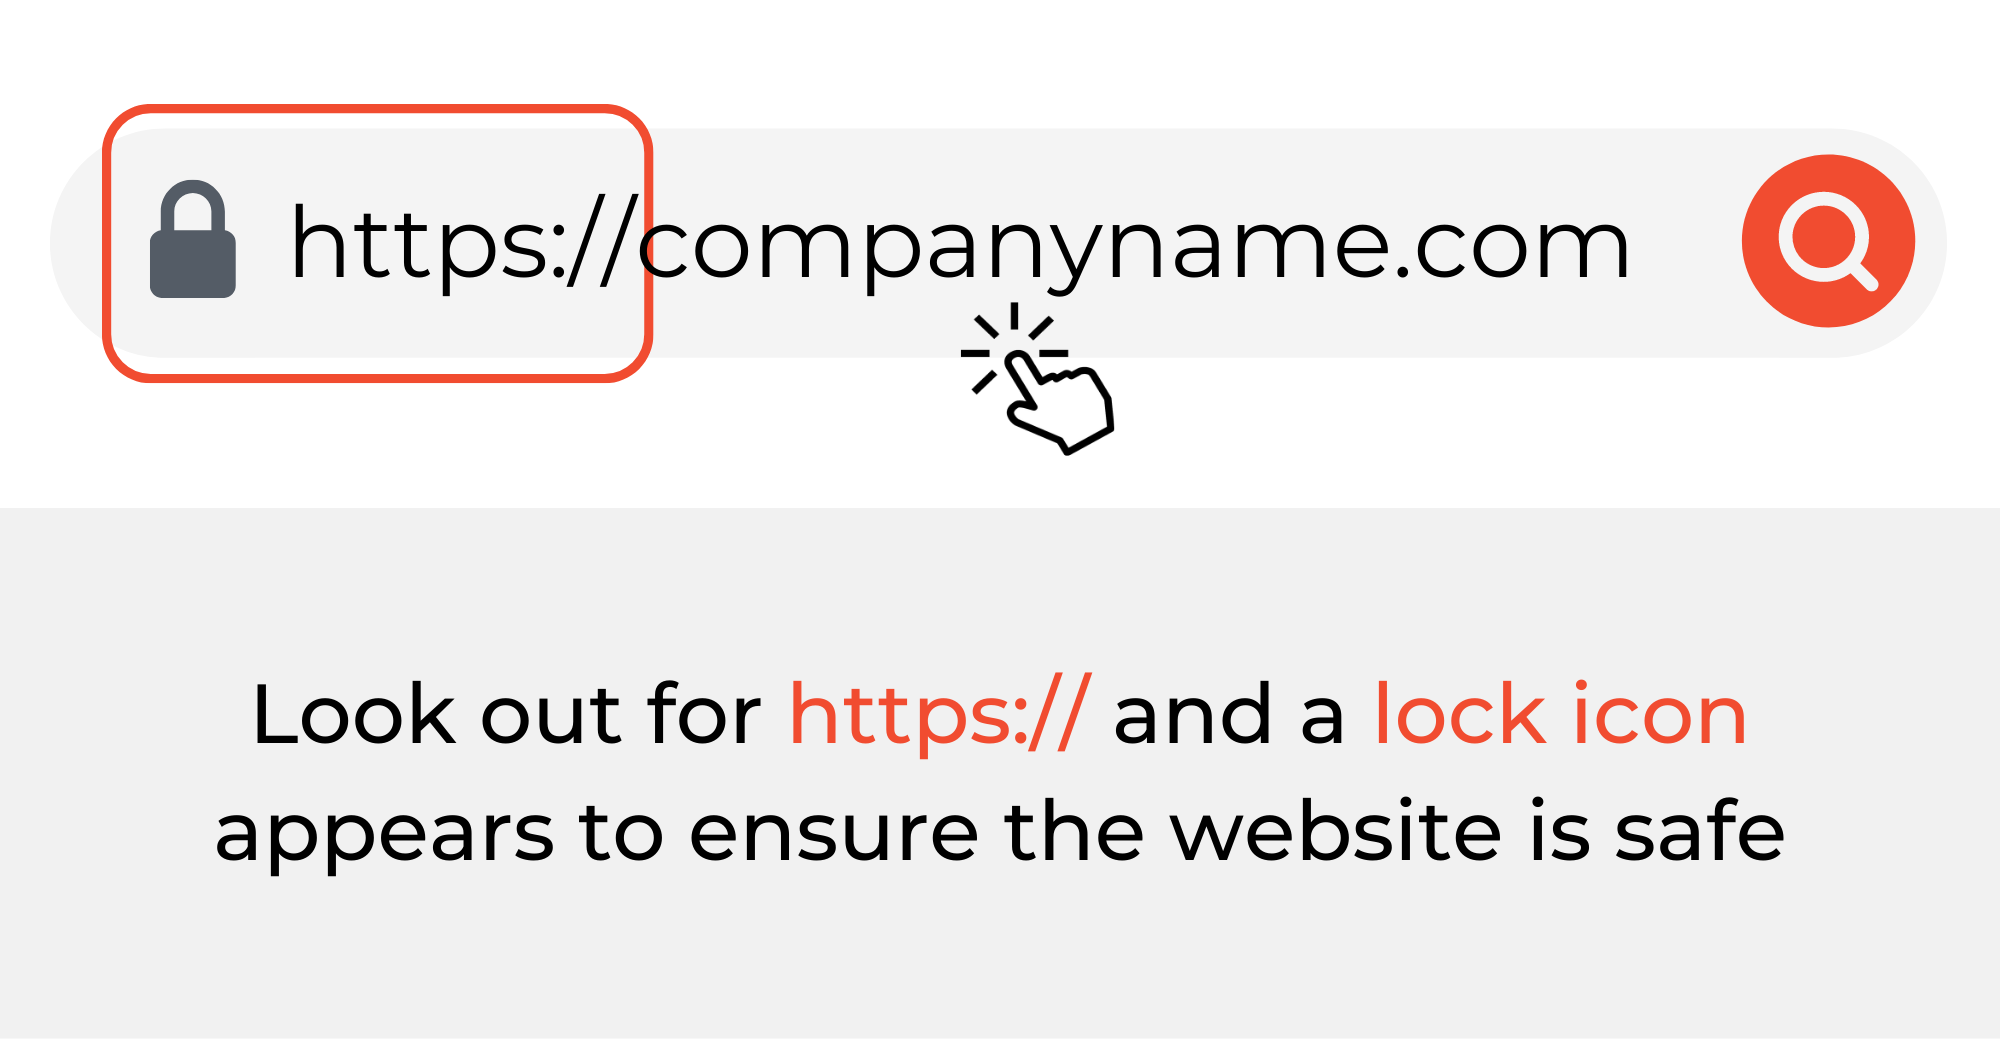 <img src="domain name.png" alt="">